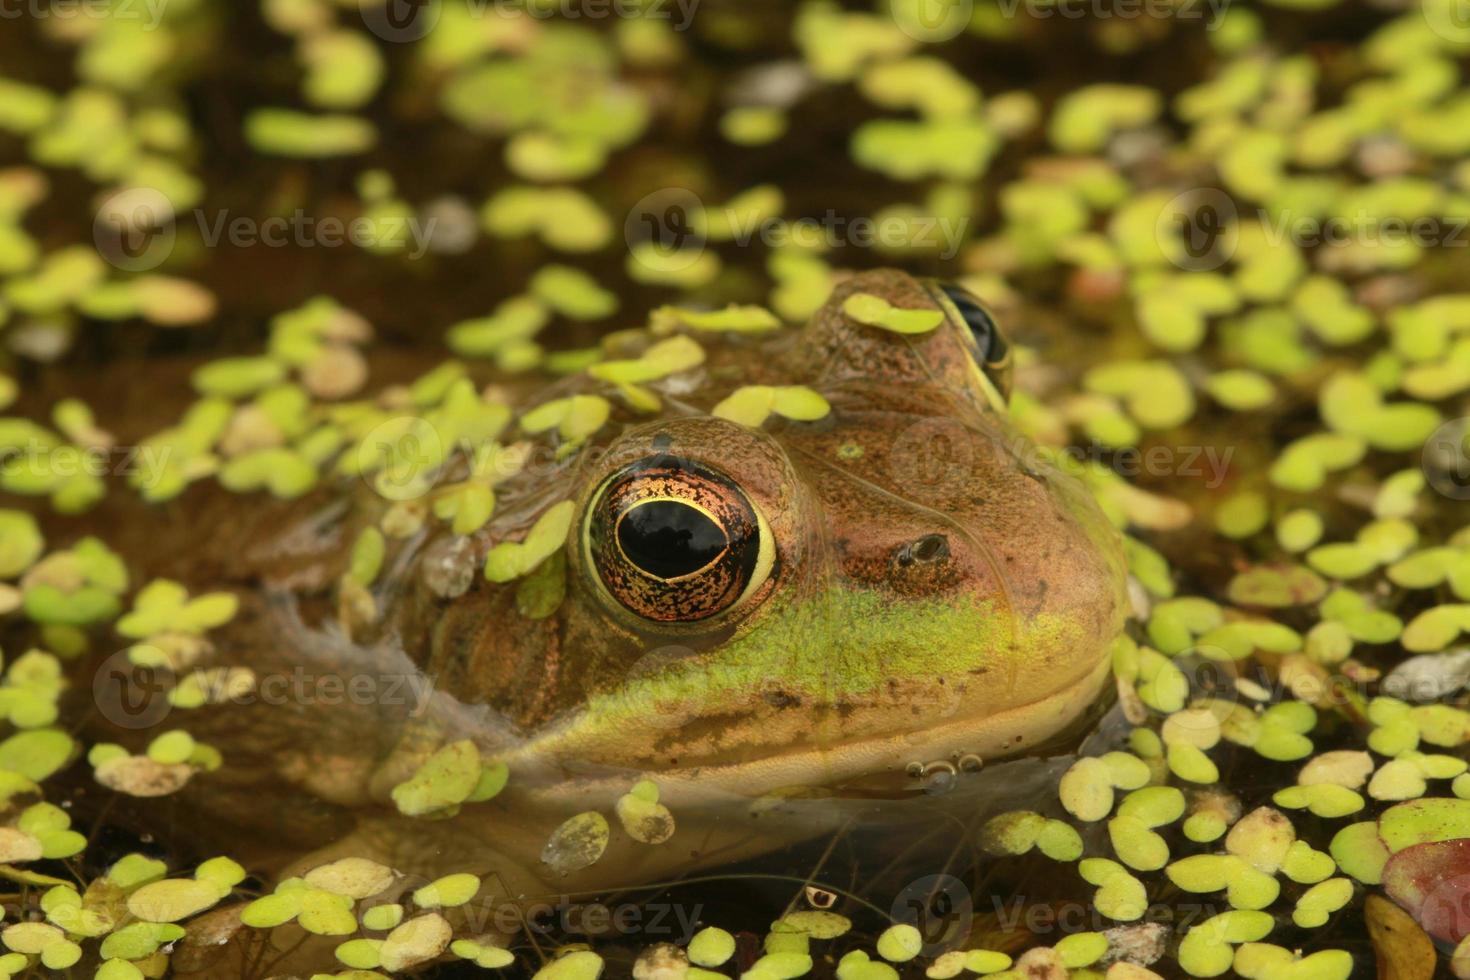 green frog in duckweed photo